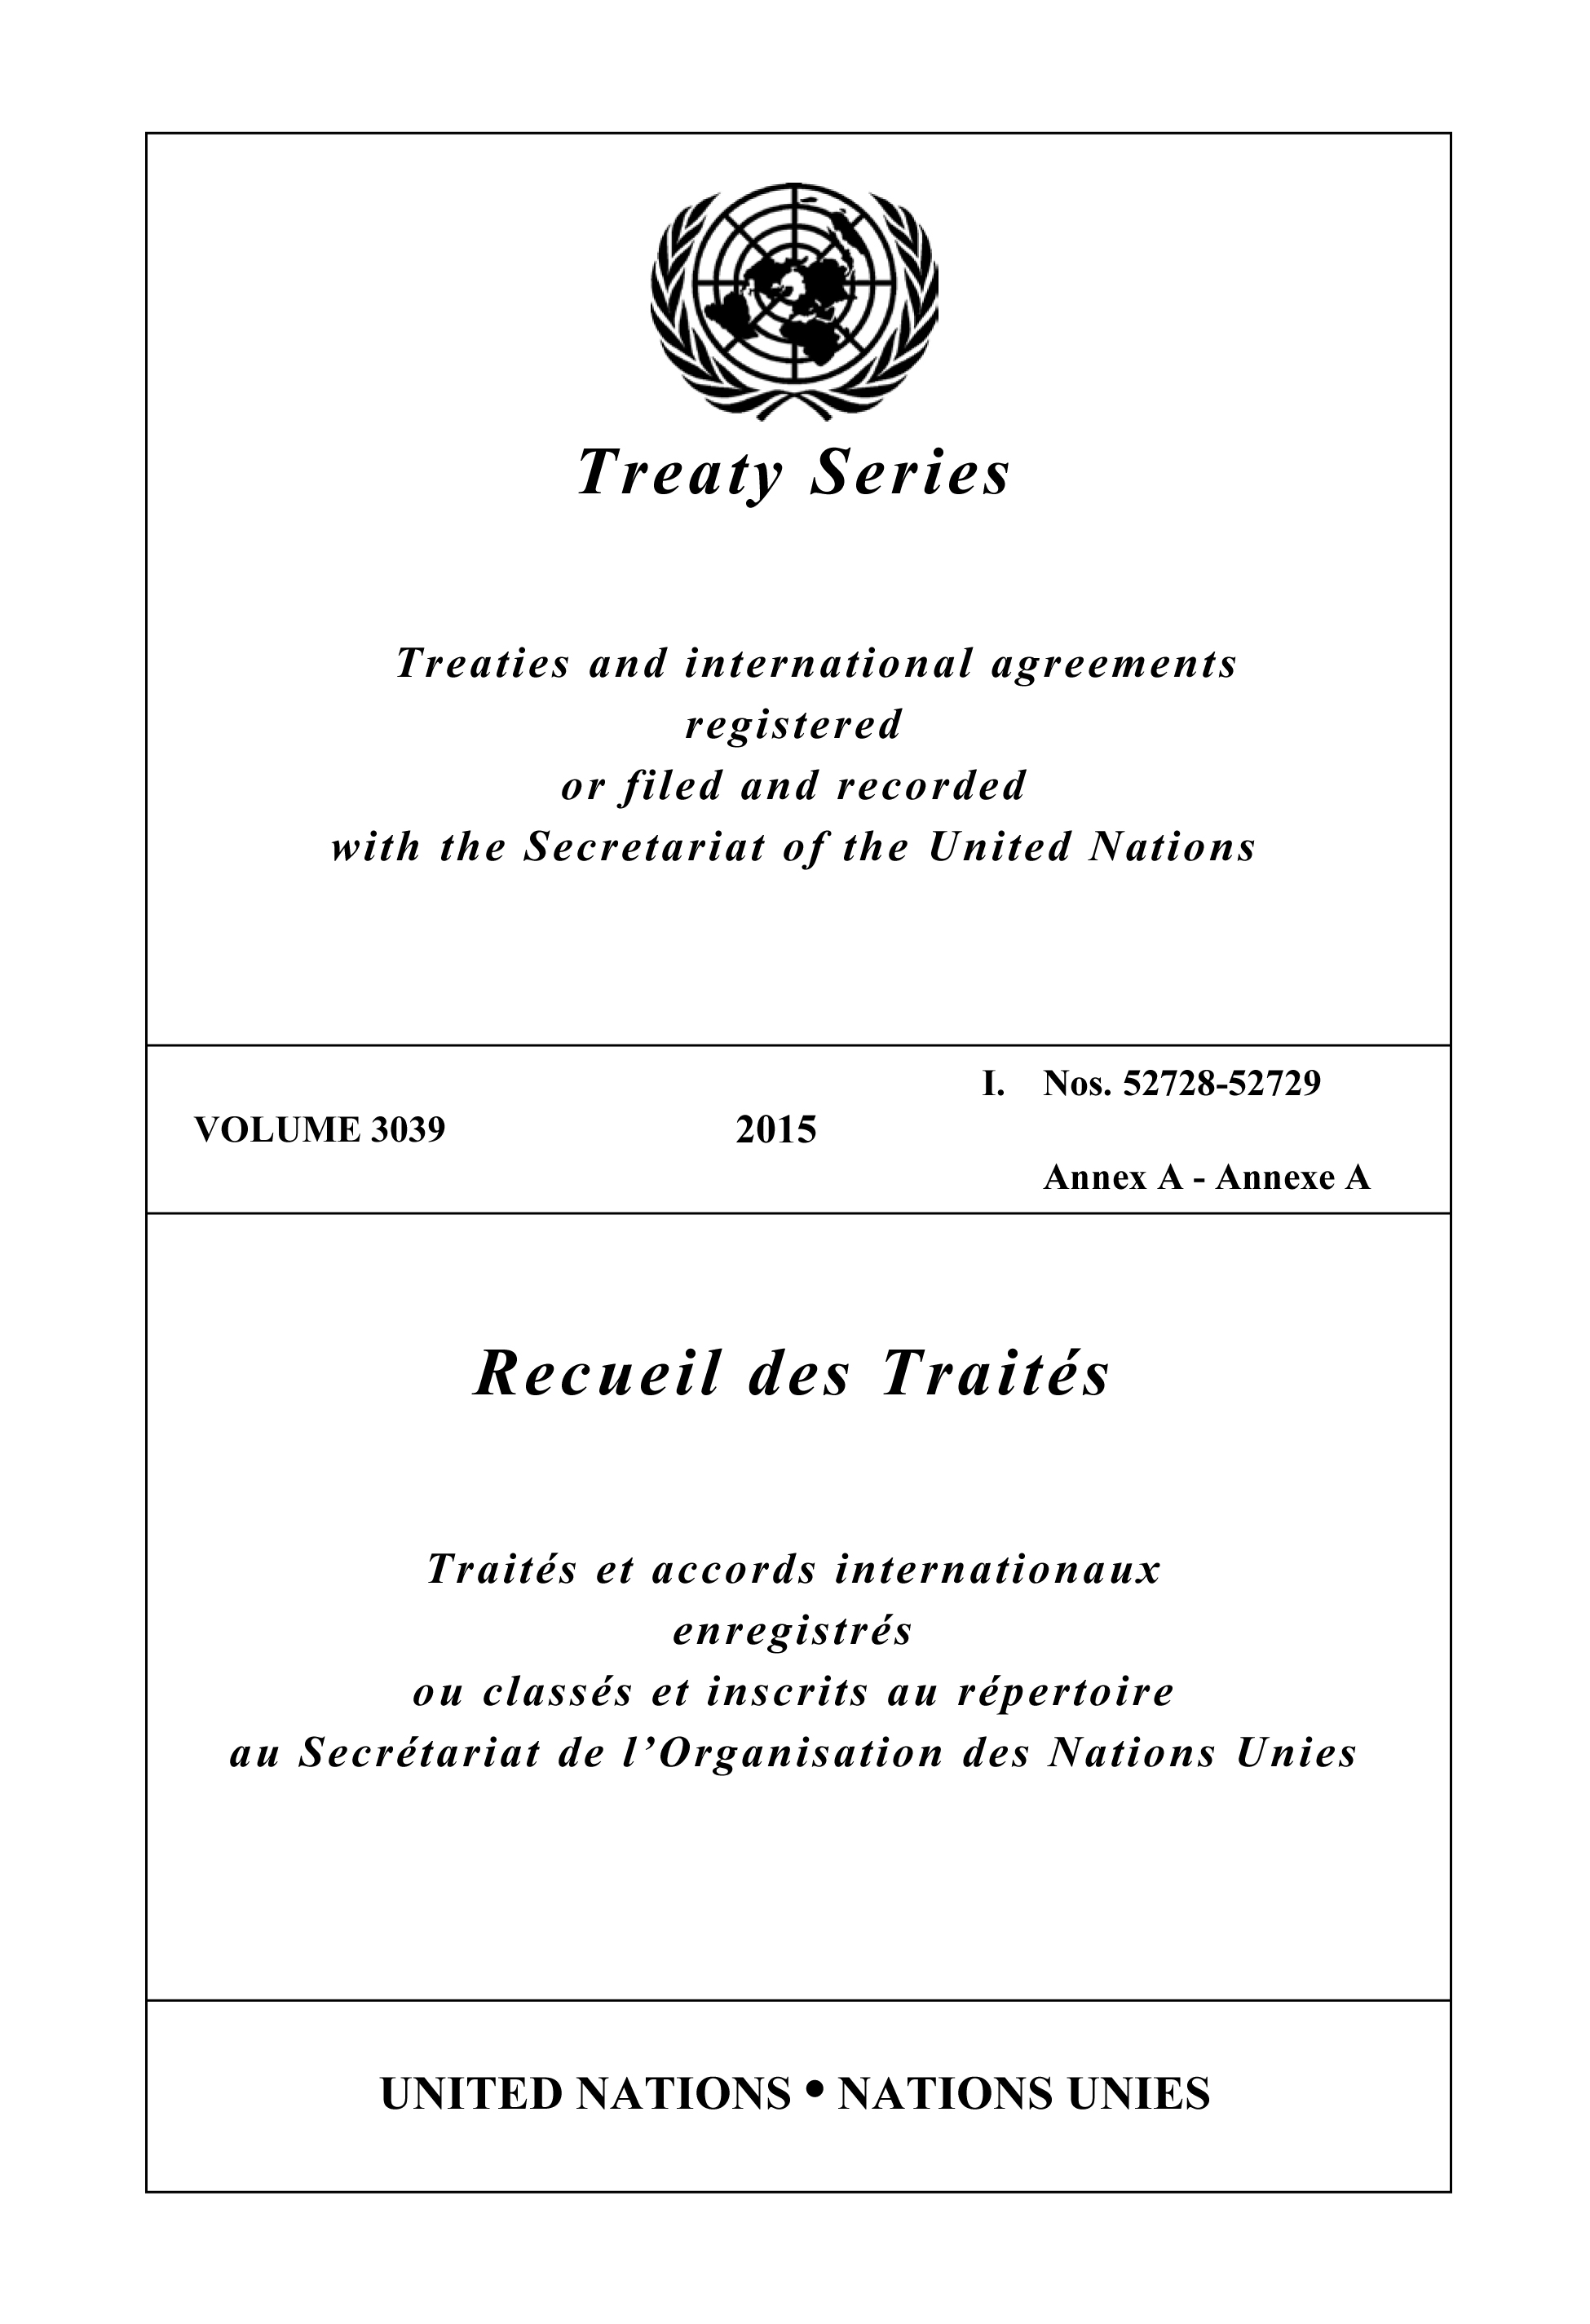 image of Treaty Series 3039